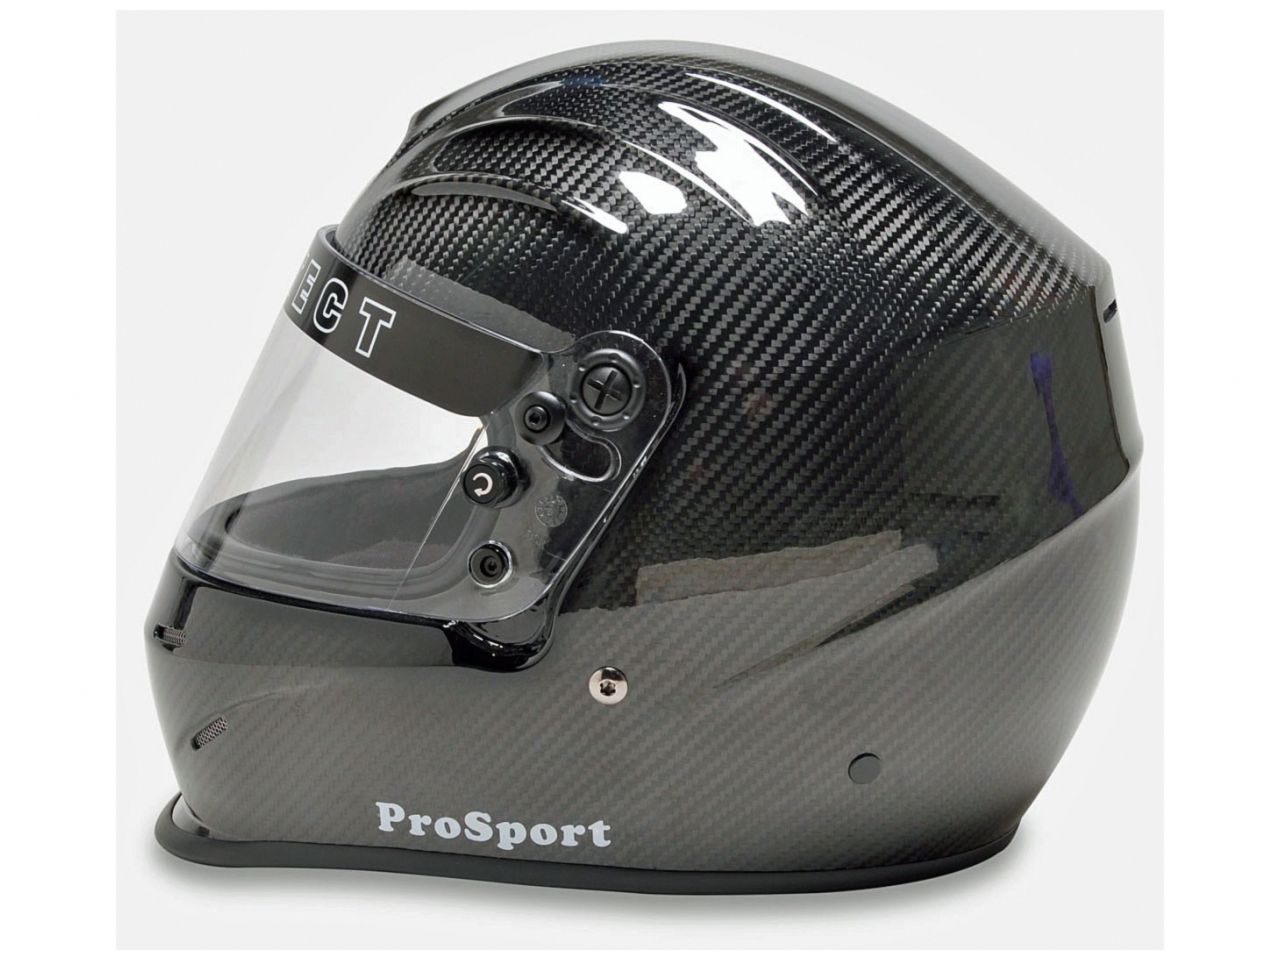 Pyrotect Prosport DB F/F Helmet, SA2015 Rated, Medium, Carbon